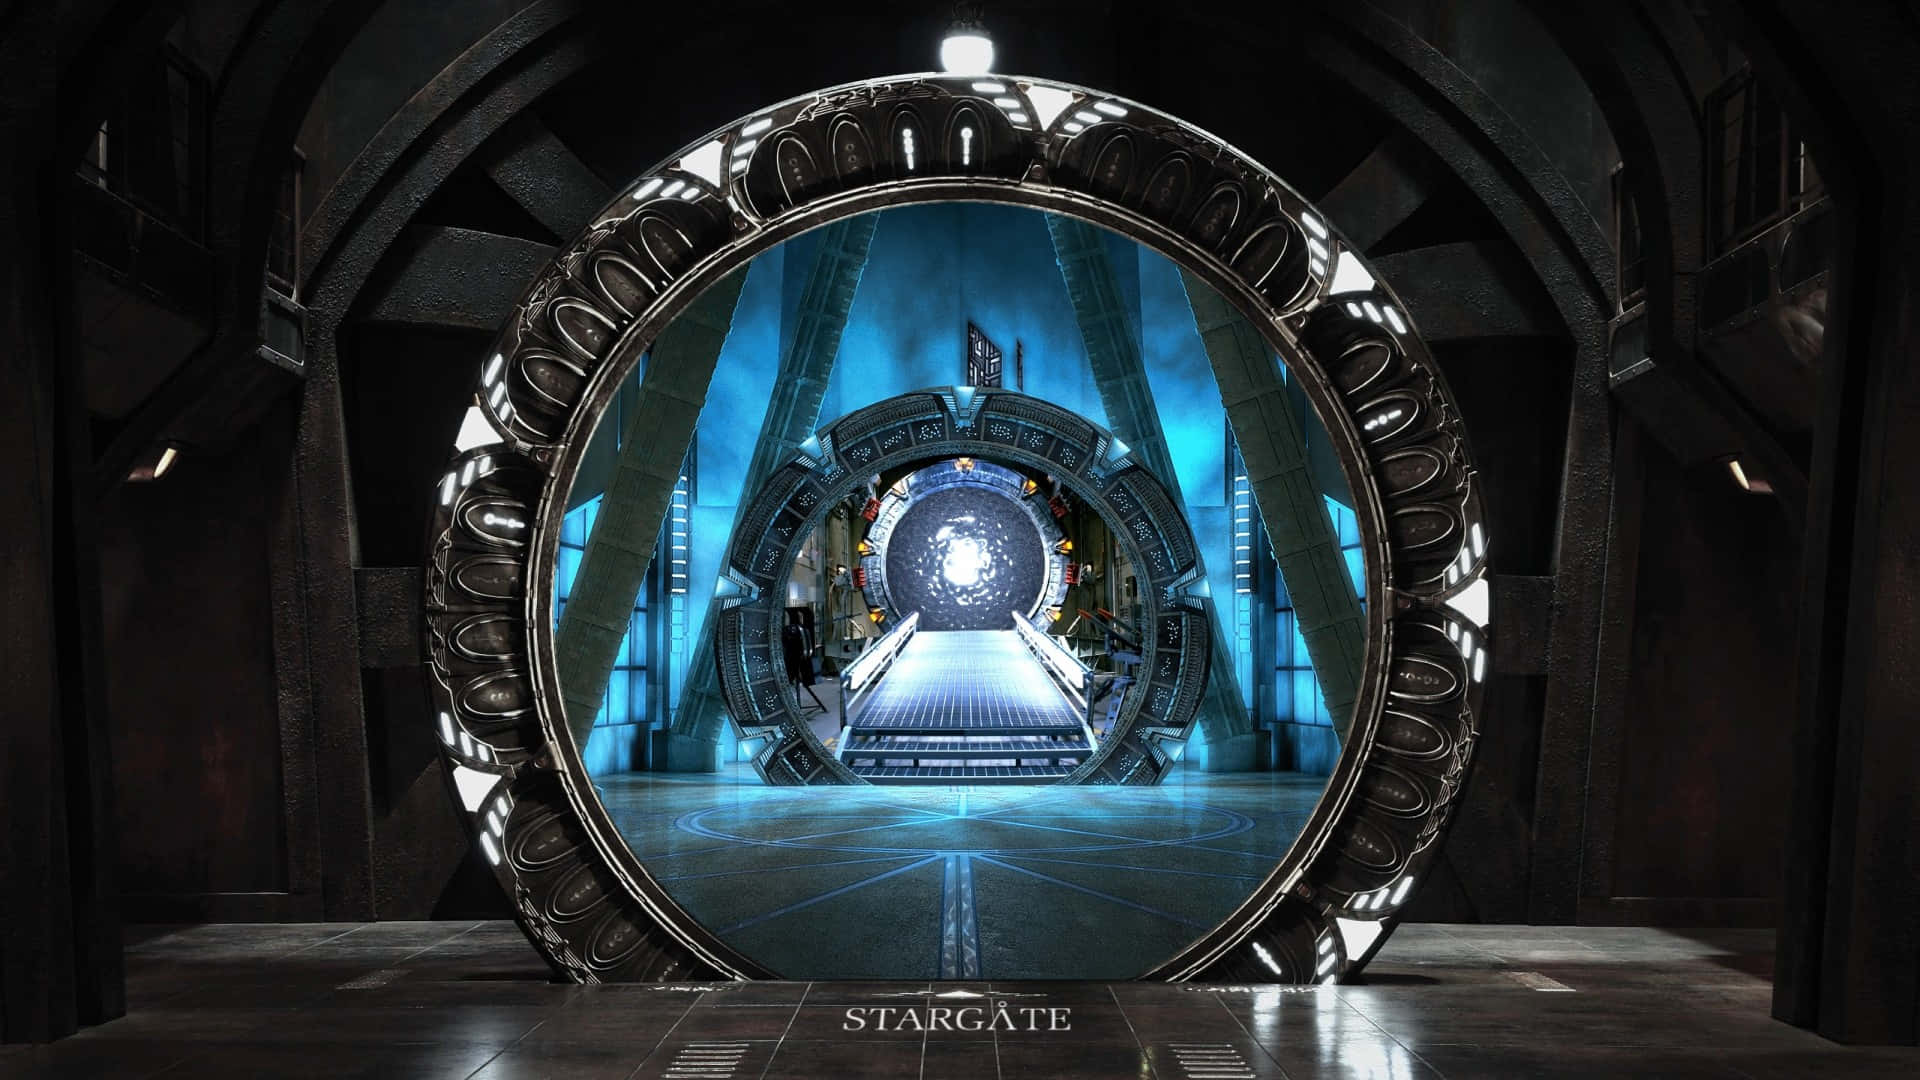 Go through the Stargate and explore the universe. Wallpaper